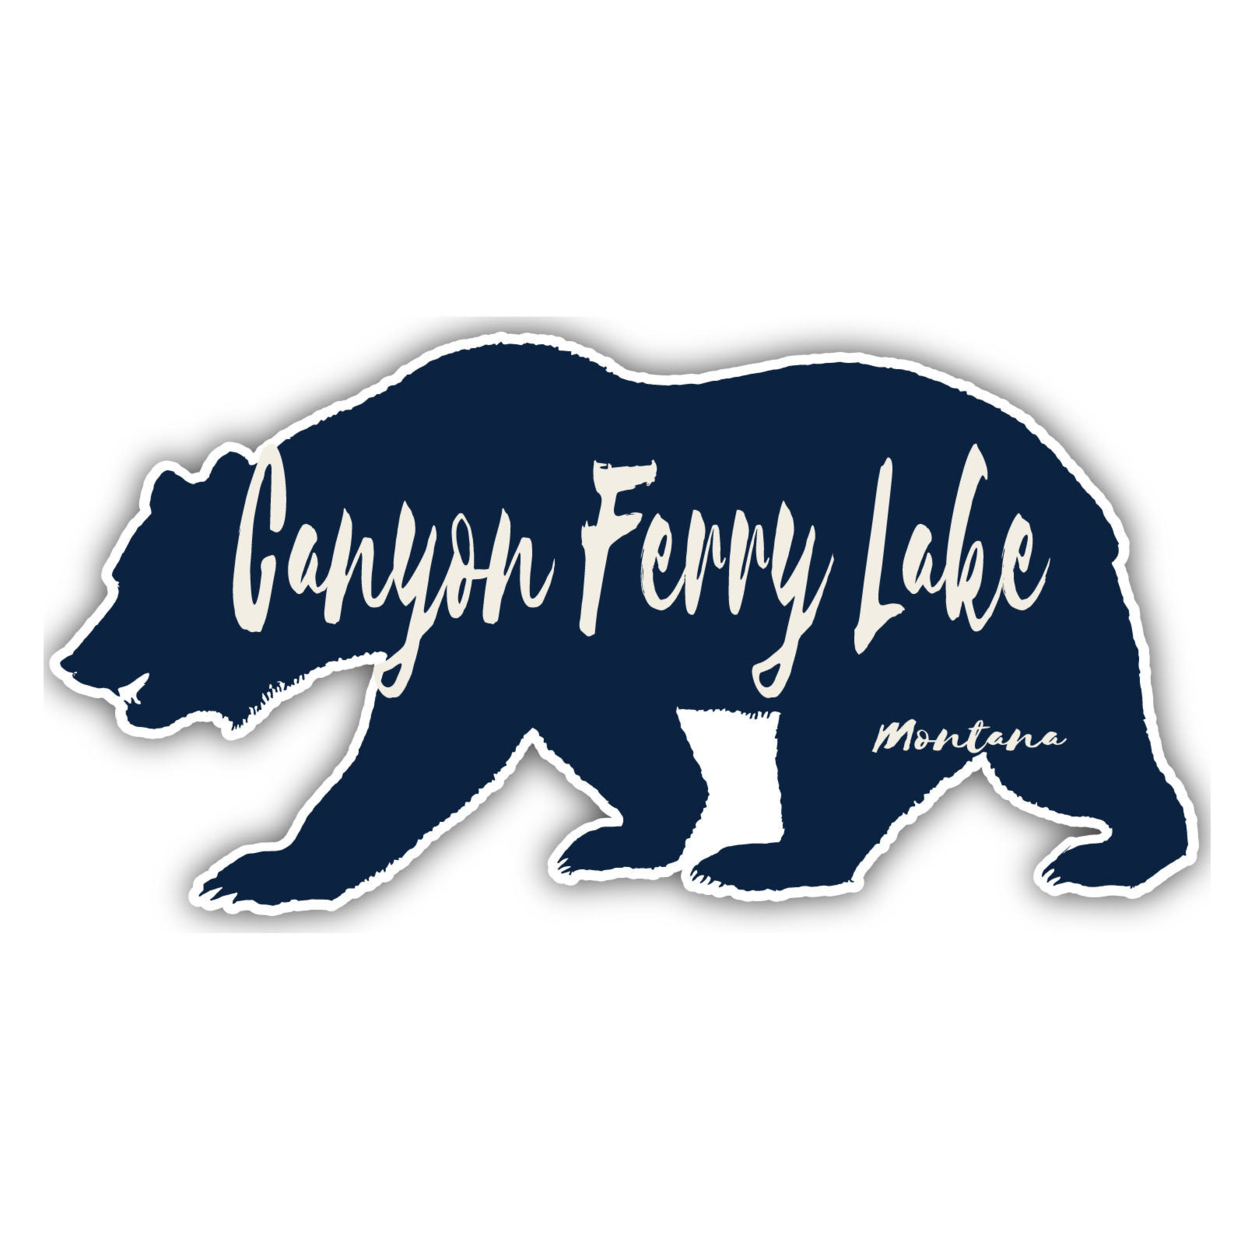 Canyon Ferry Lake Montana Souvenir Decorative Stickers (Choose Theme And Size) - Single Unit, 6-Inch, Bear